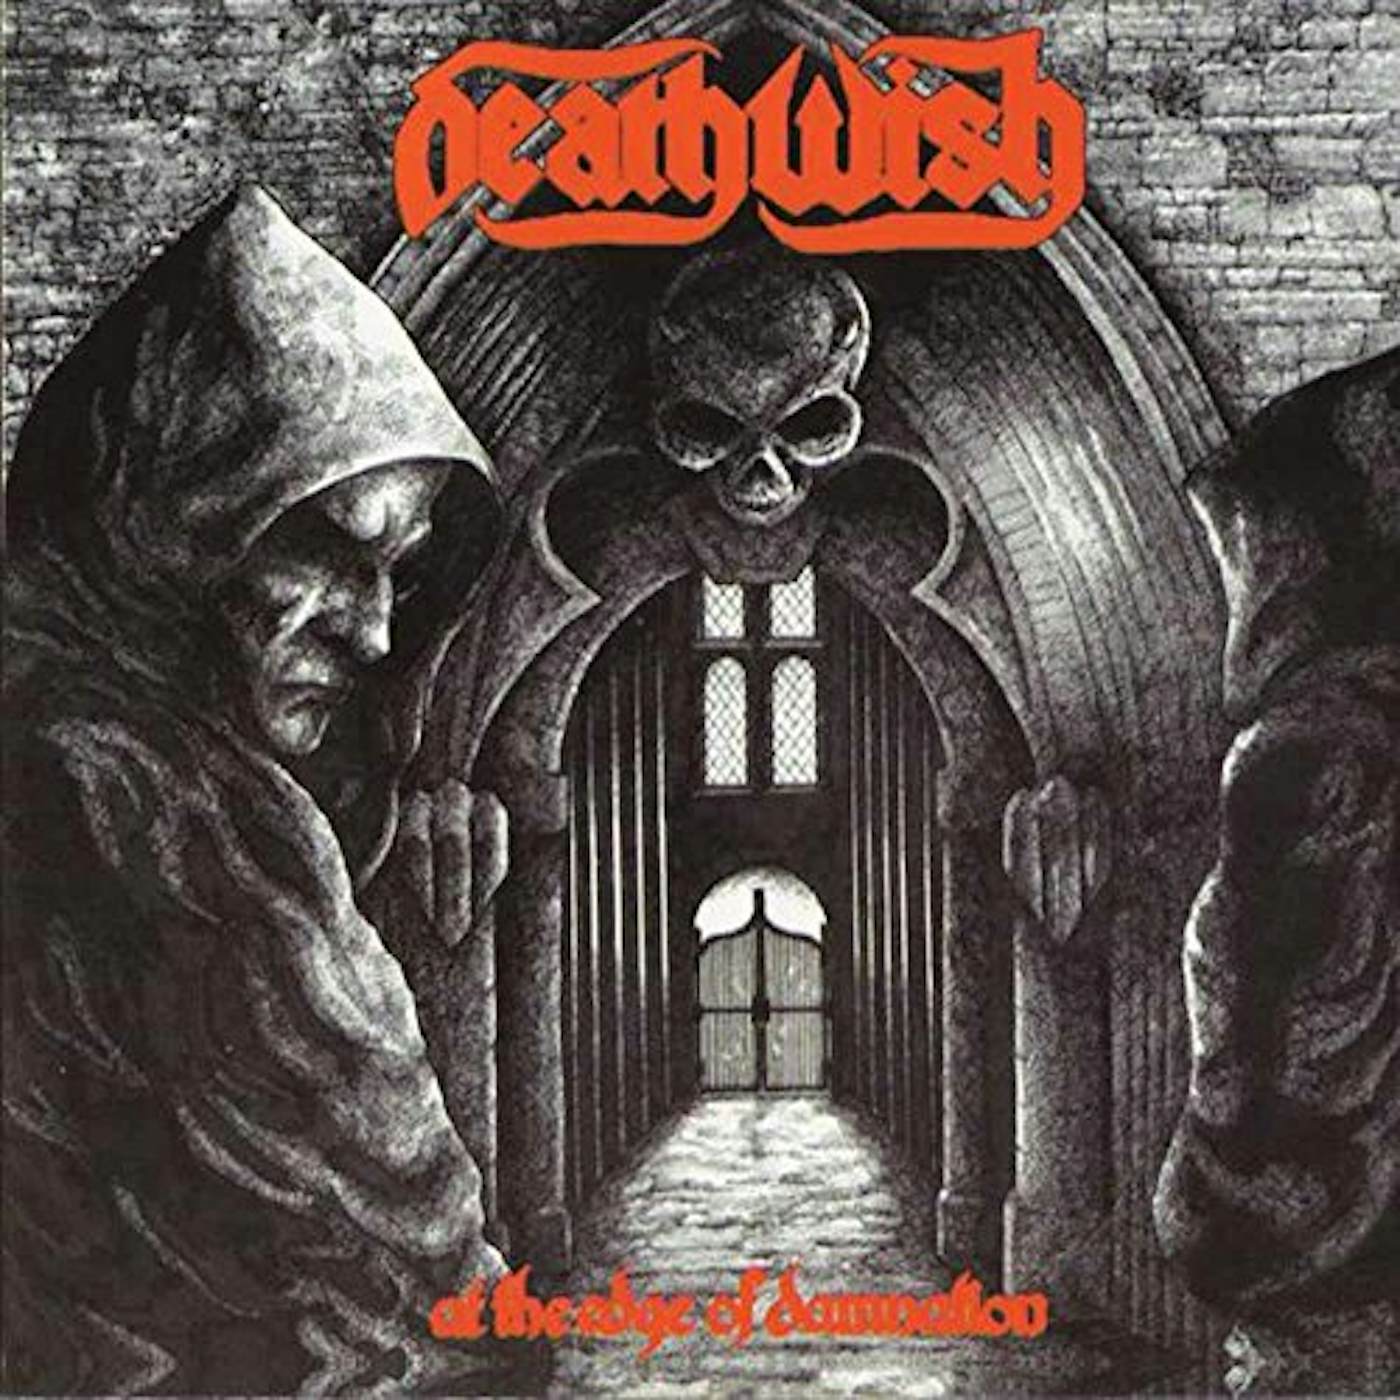 Deathwish At the Edge of Damnation Vinyl Record